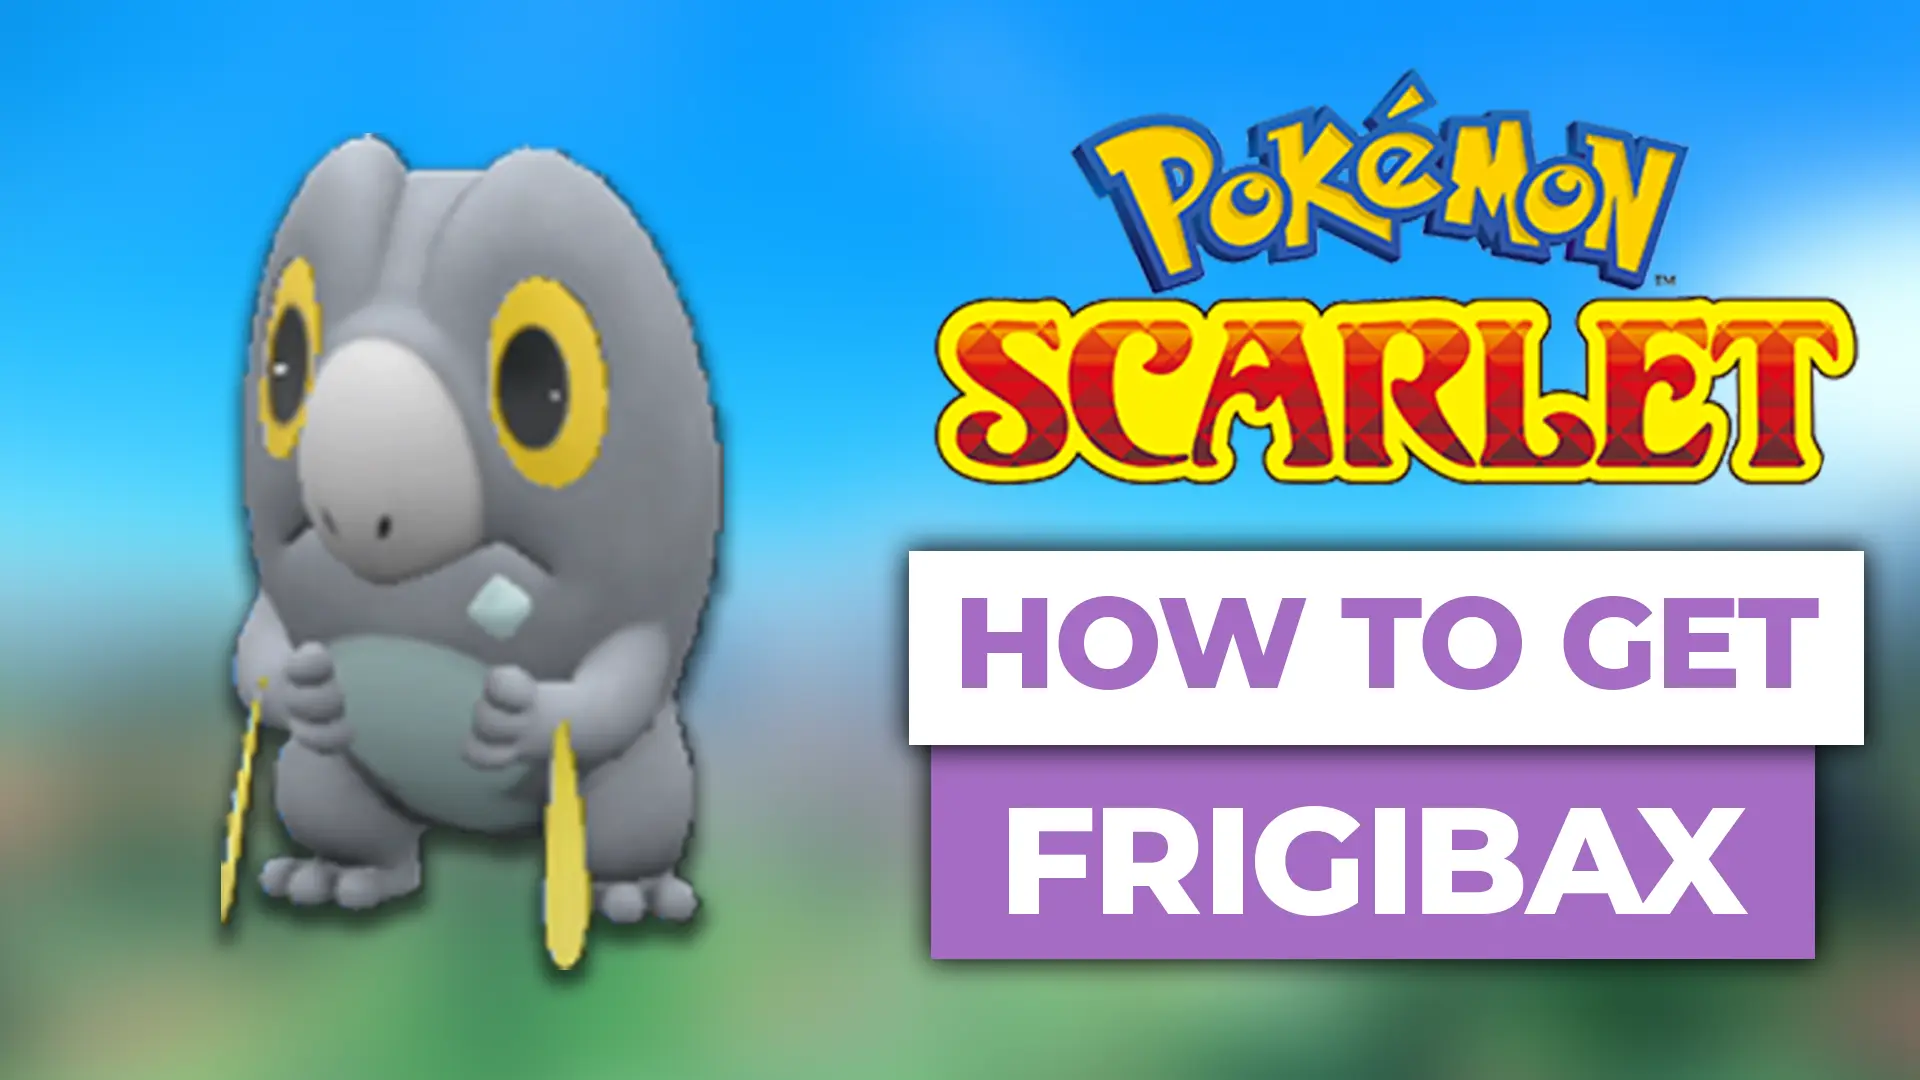 How To Get Frigibax in Pokemon Go